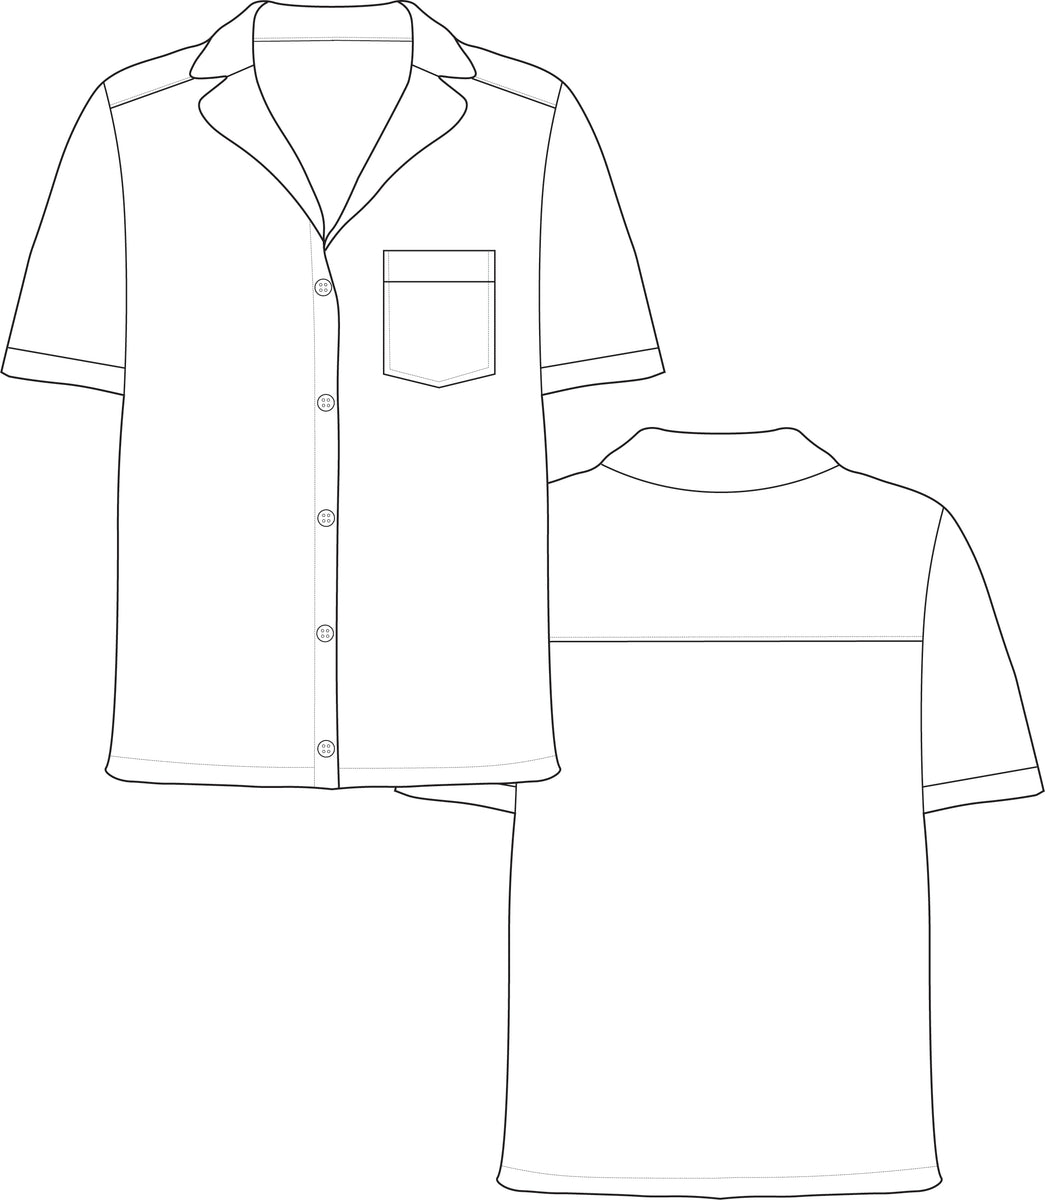 Pajama Top Technical Drawing - PJ Top Vector